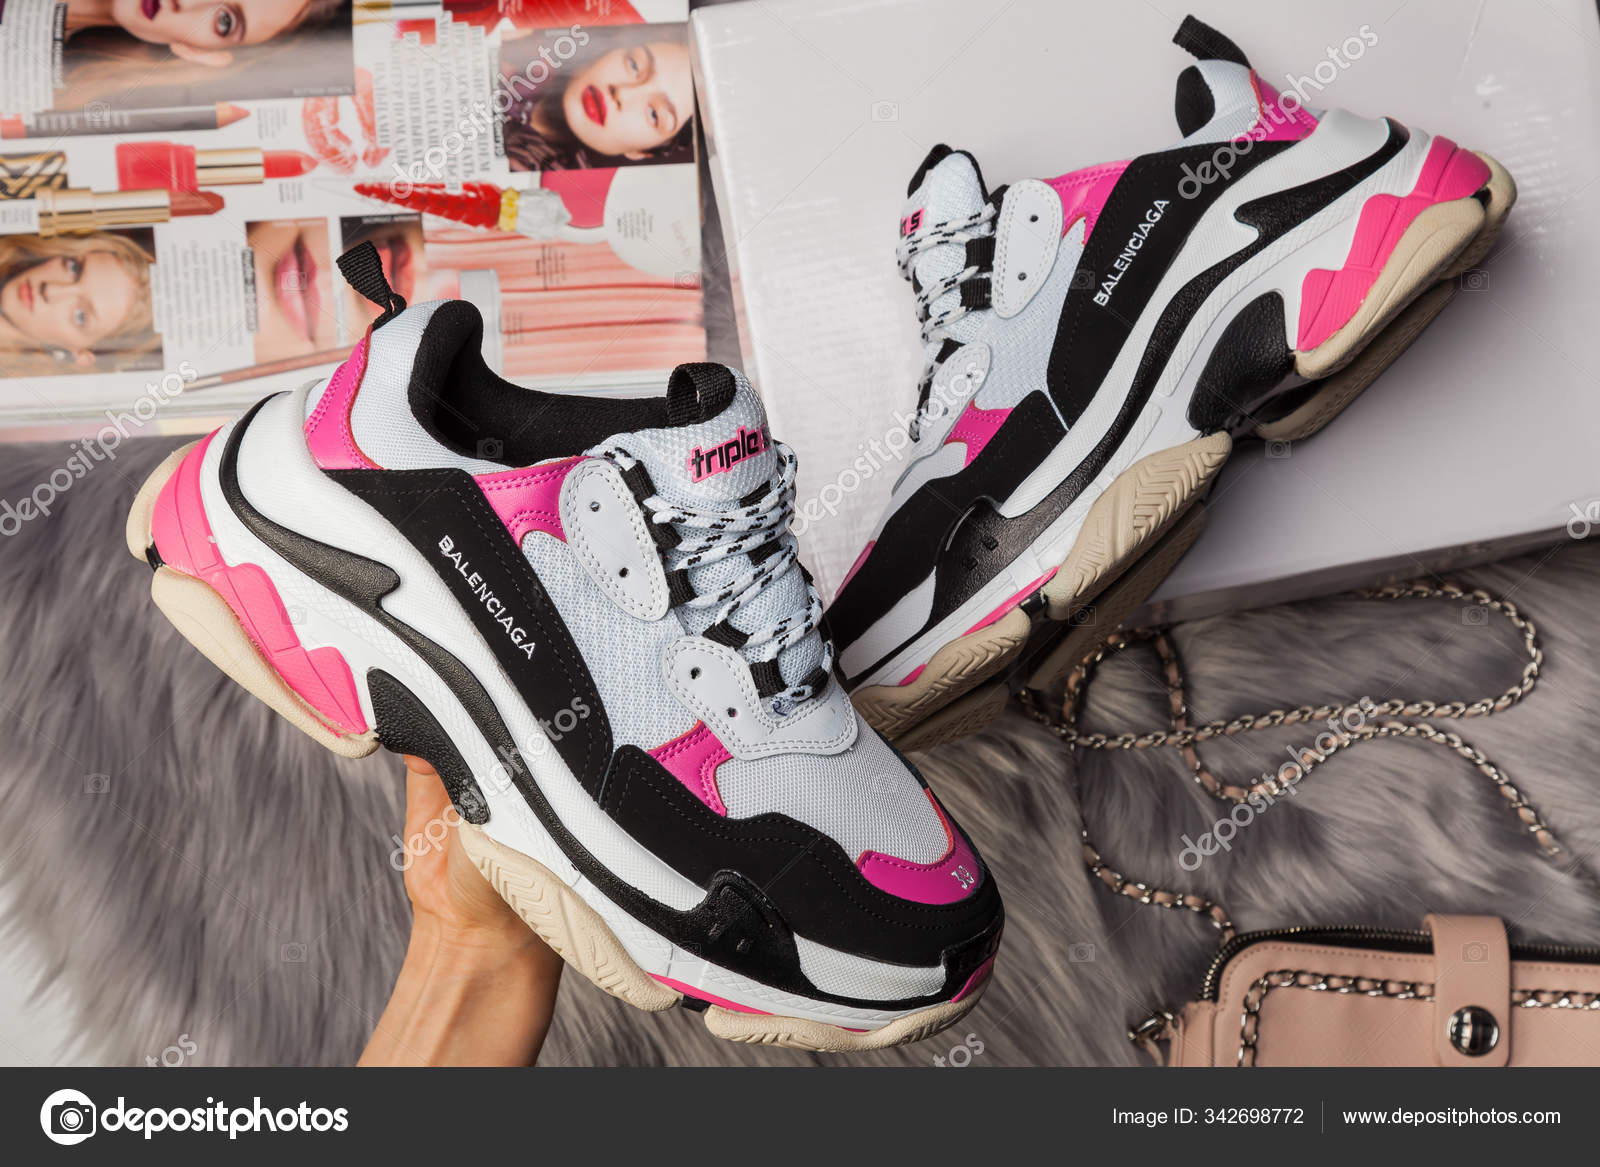 New Beautiful Nice Balenciaga Running Shoes Trainers Shows Editorial Photo © sozon #342698772